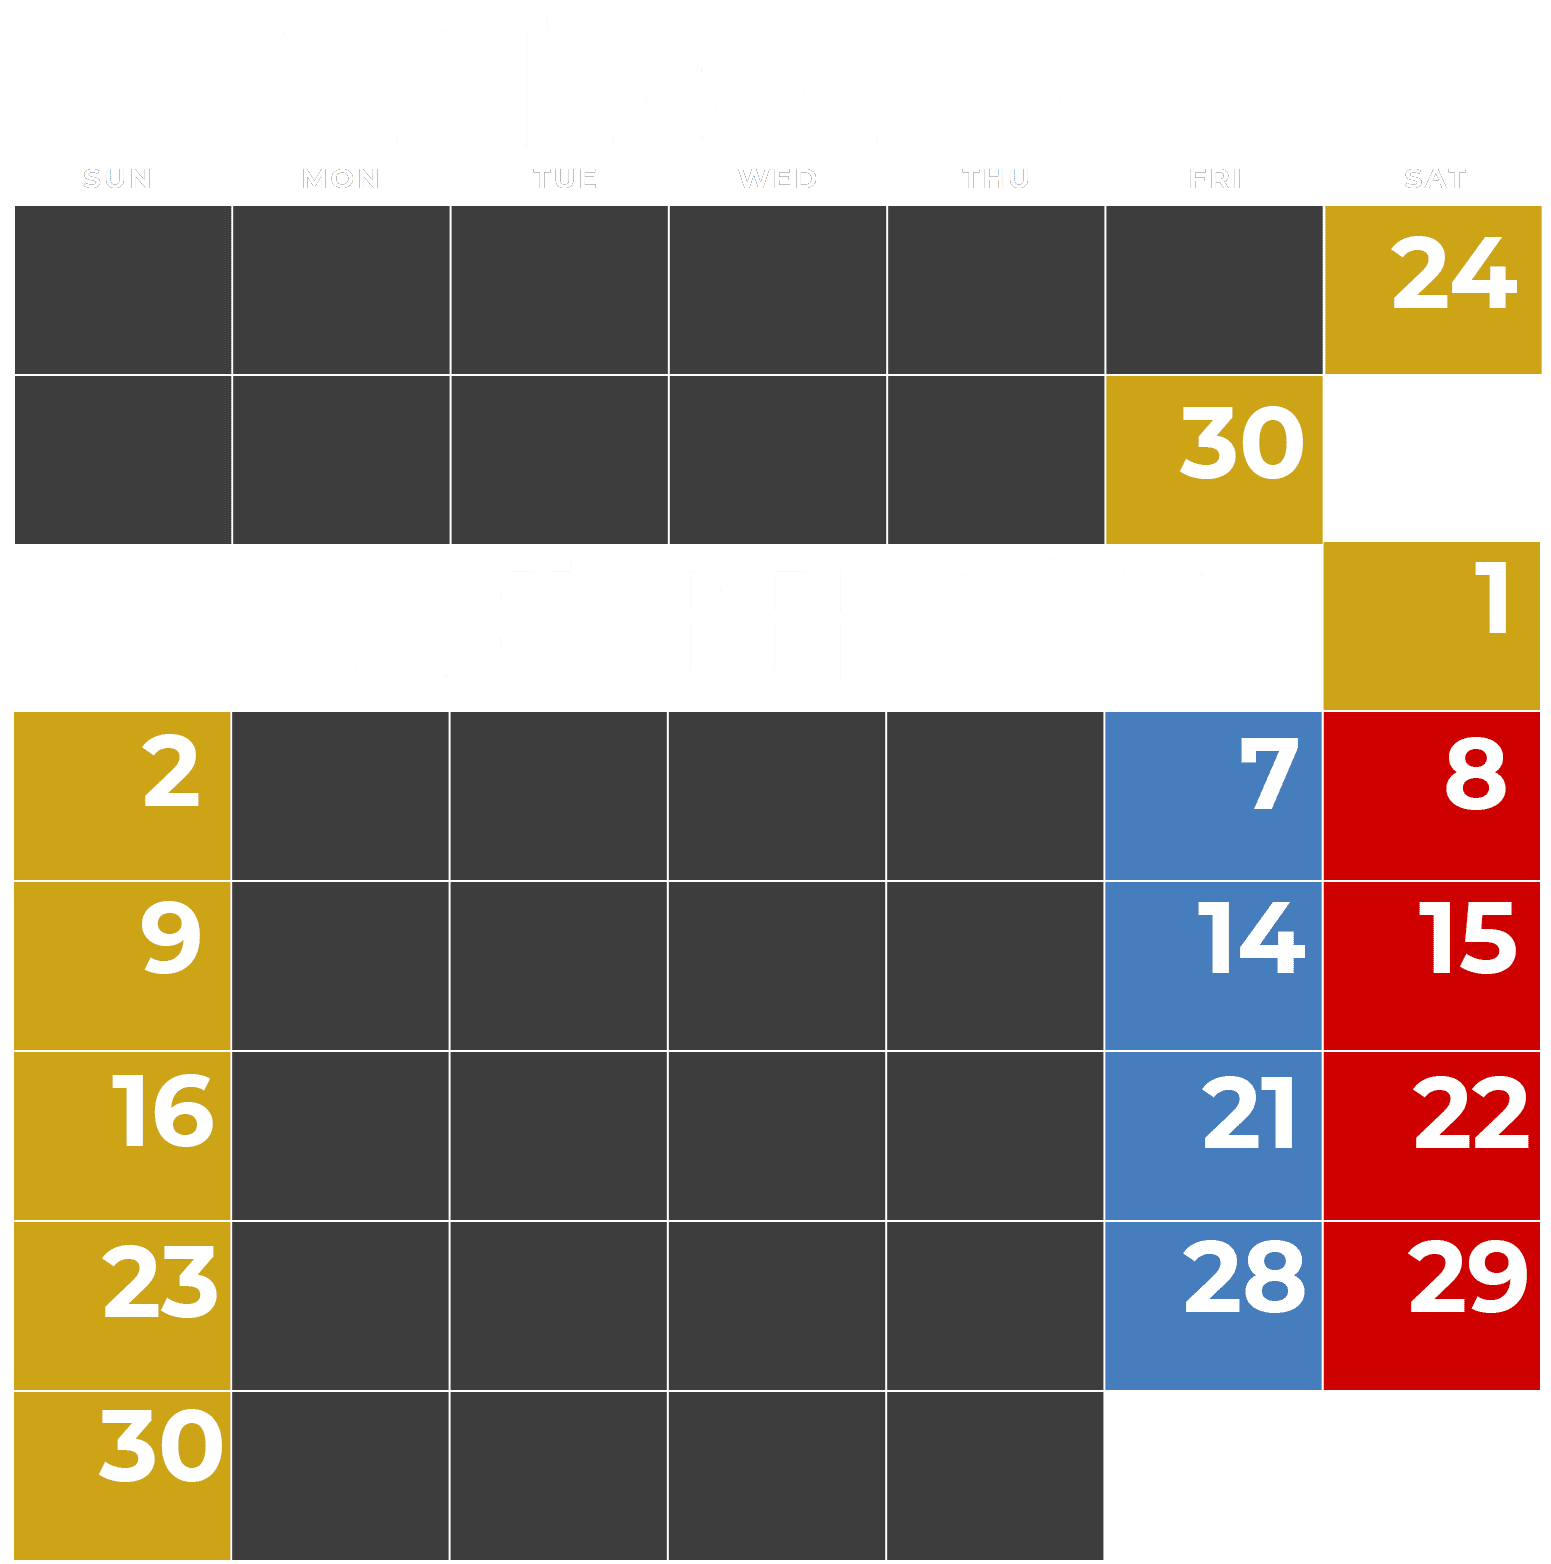 Pure Terror Haunted ScreamPark 2022 Dates